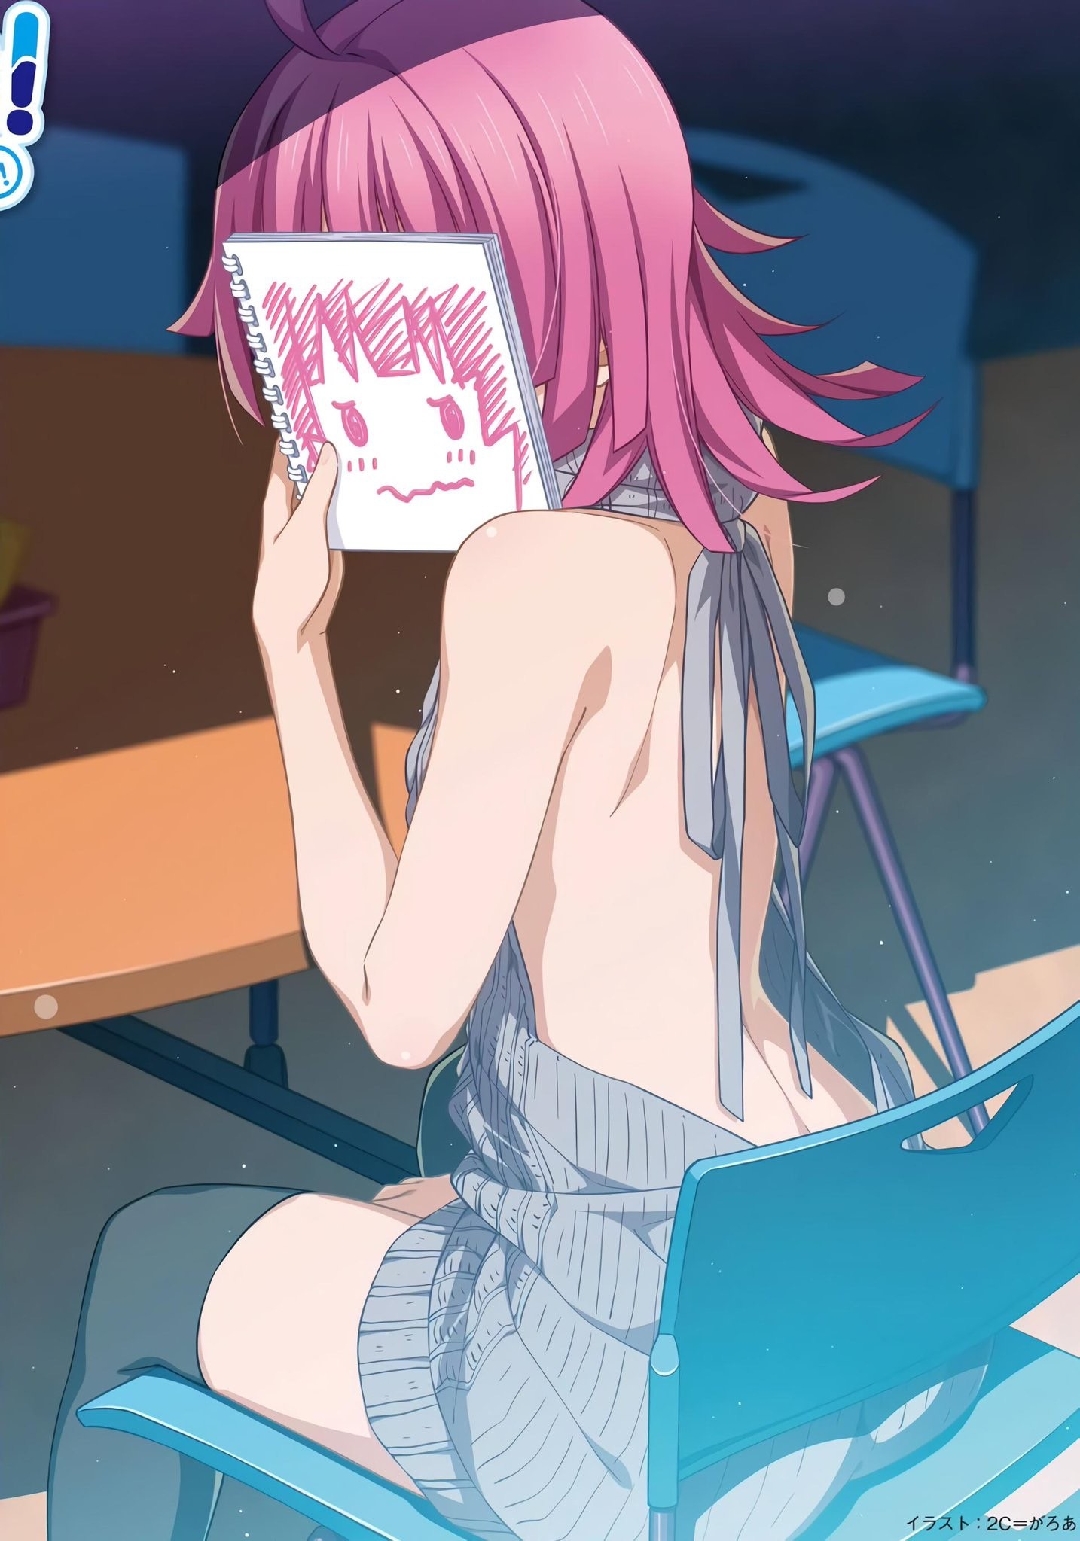 Anime 1080x1541 anime girls anime Virgin Killer Sweater covering face pink hair stockings Tennoji Rina embarrassed